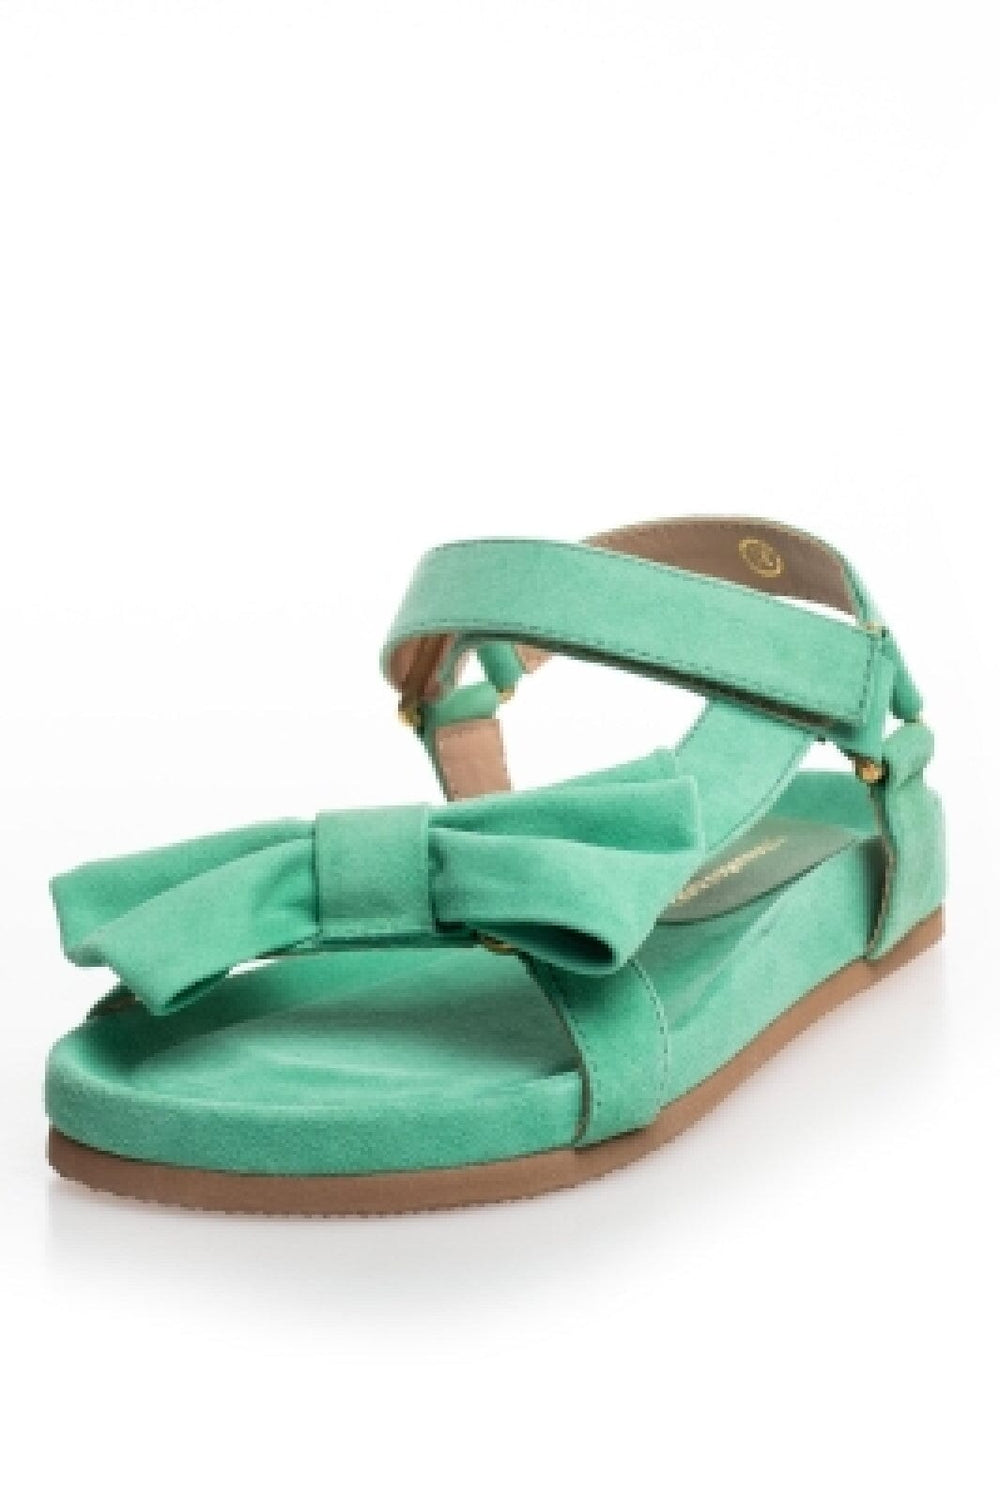 Copenhagen sandaler » Shop stort udvalg hos Molly&My!